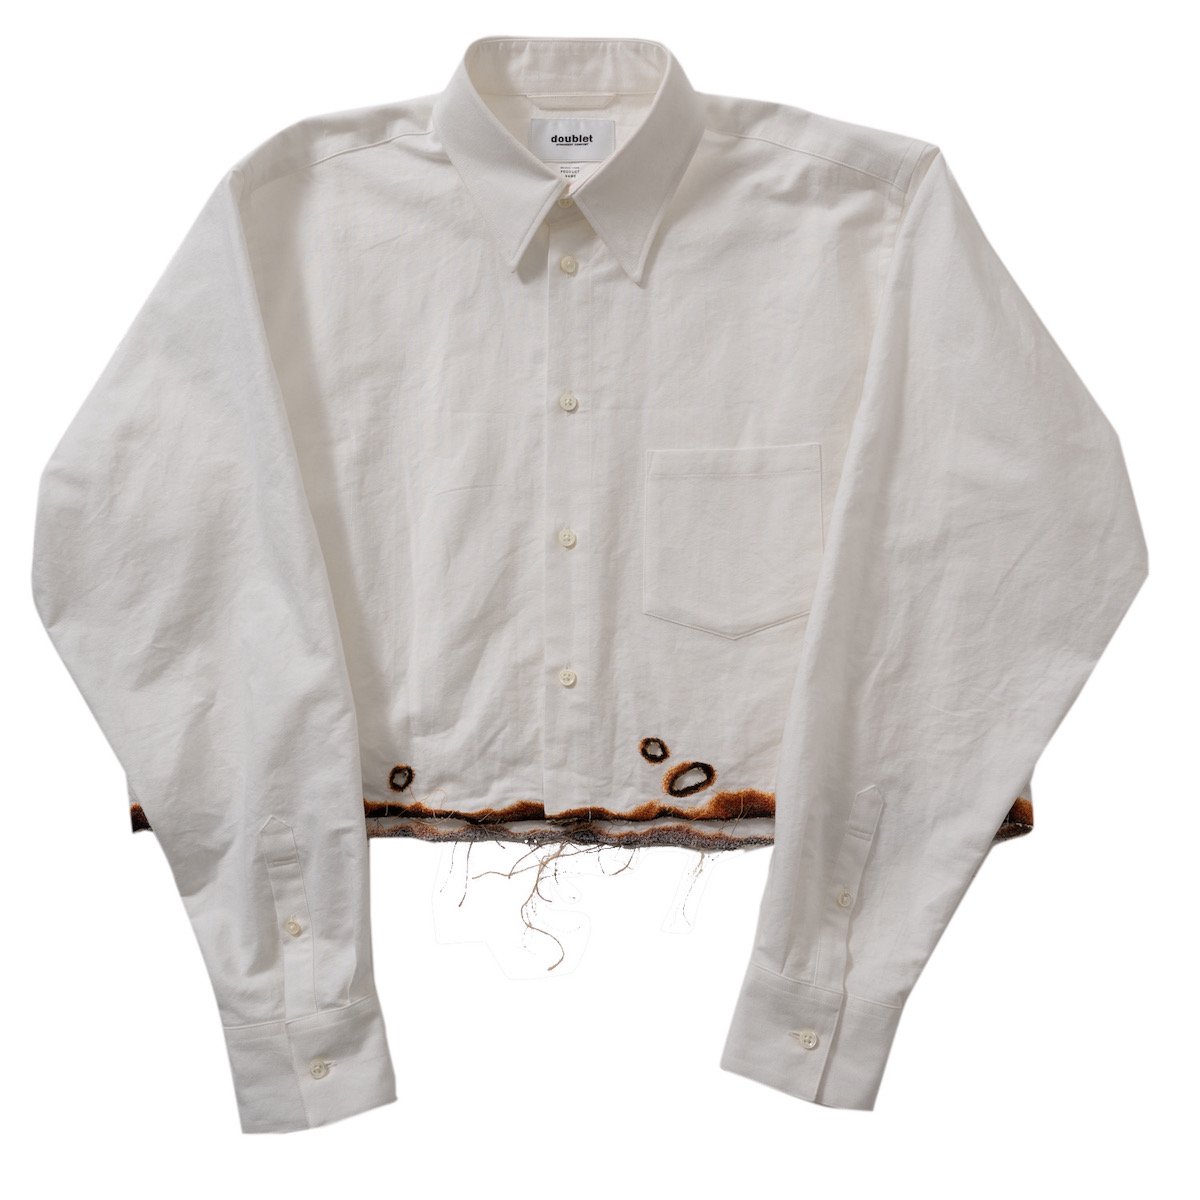 Tシャツ/カットソー新品タグ付 DOUBLE.B カットワークシャツ100